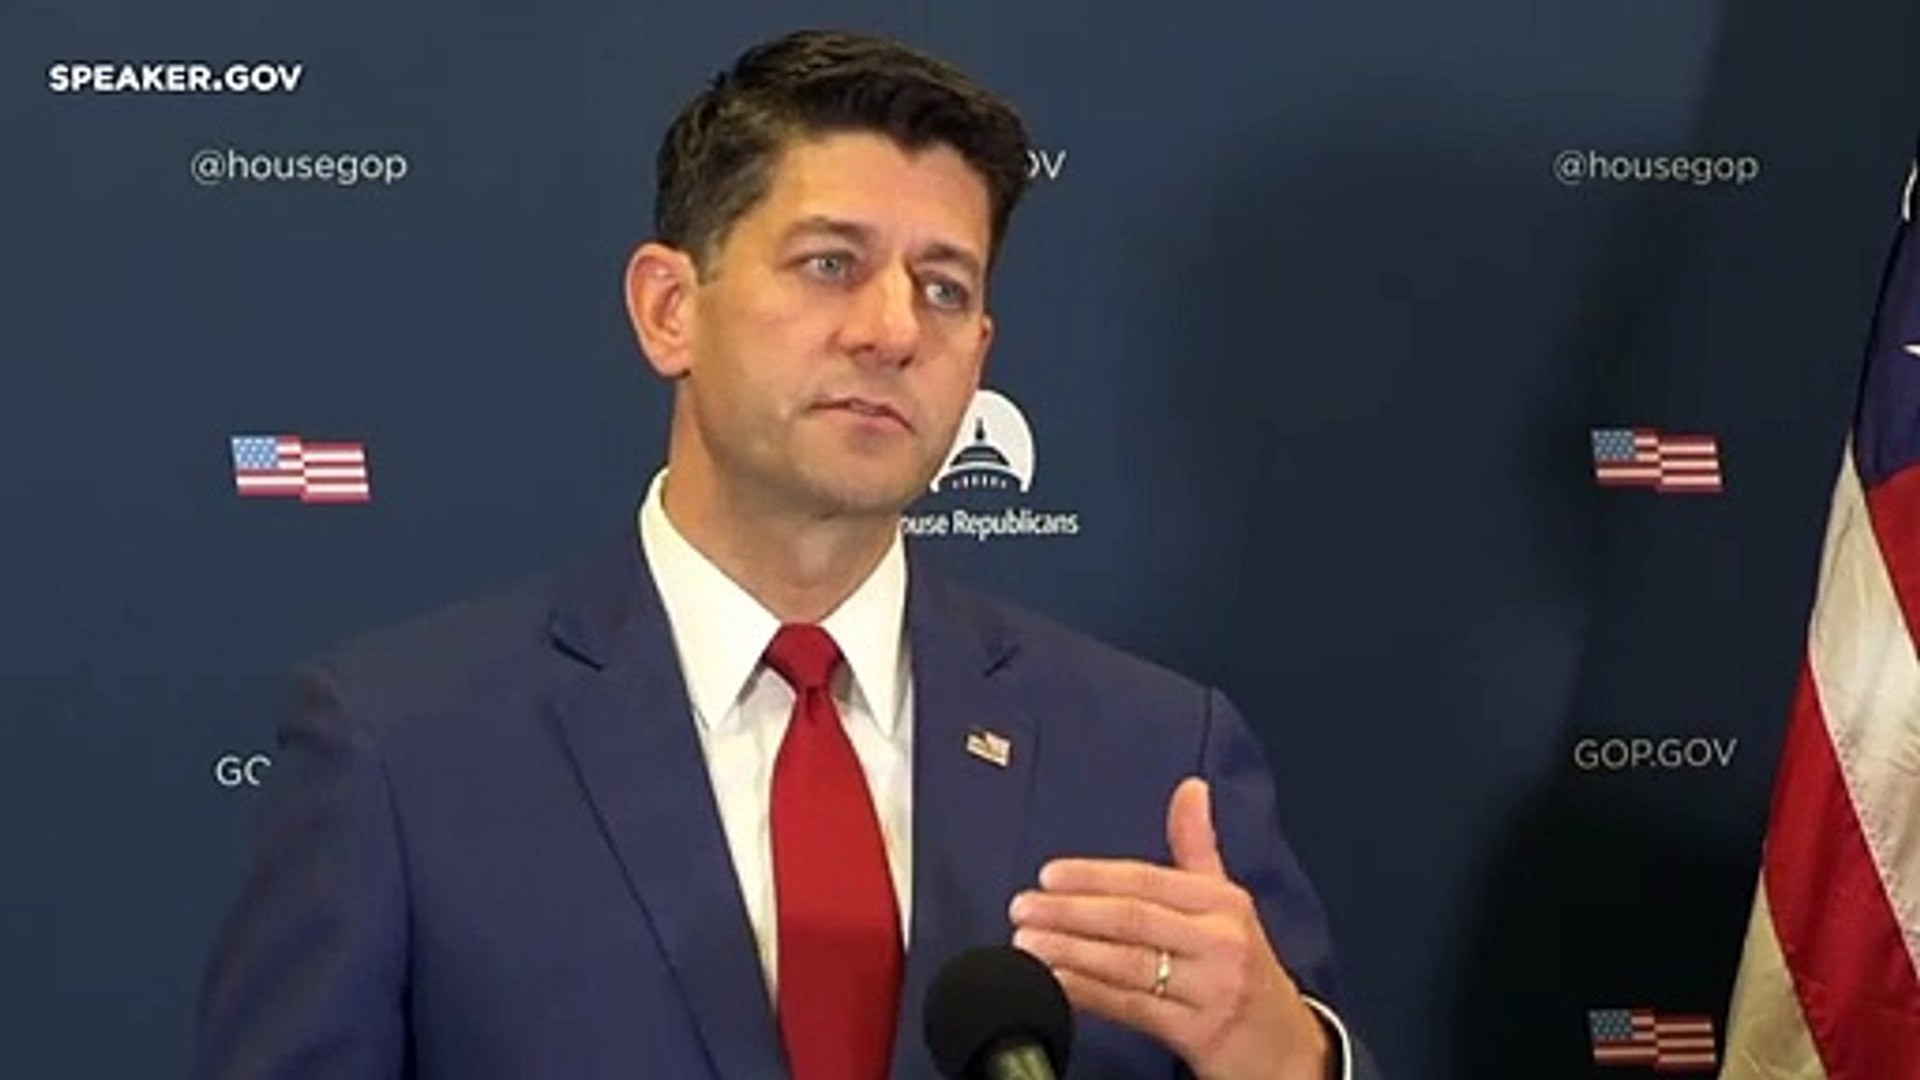 Paul Ryan Launches New Non-Profit American Idea Foundation